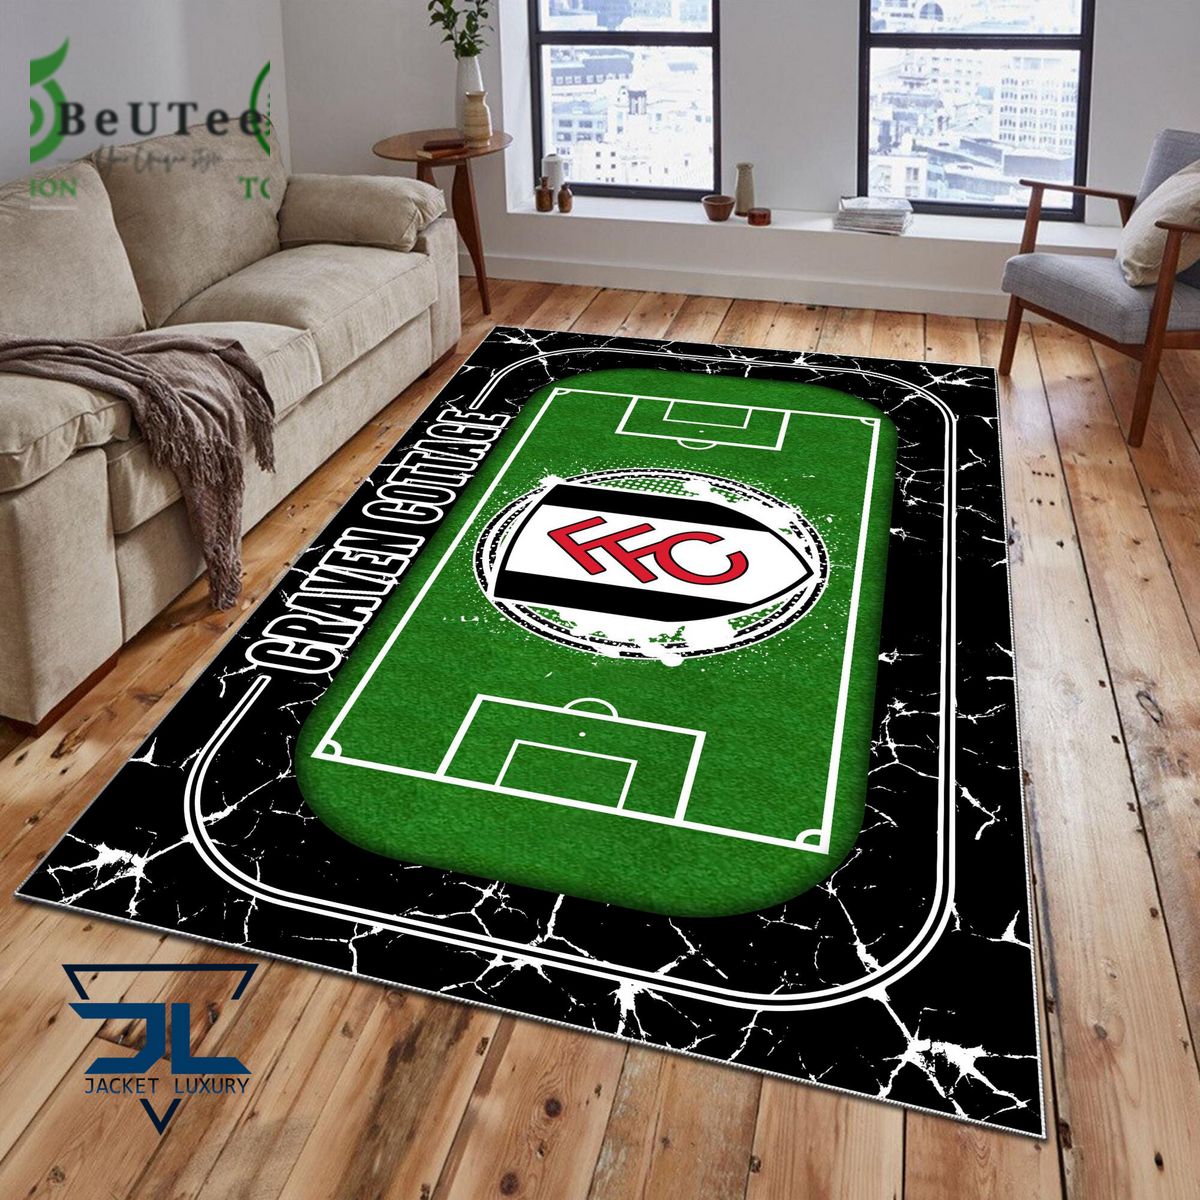 fulham premier league football team carpet rug 1 hDyEm